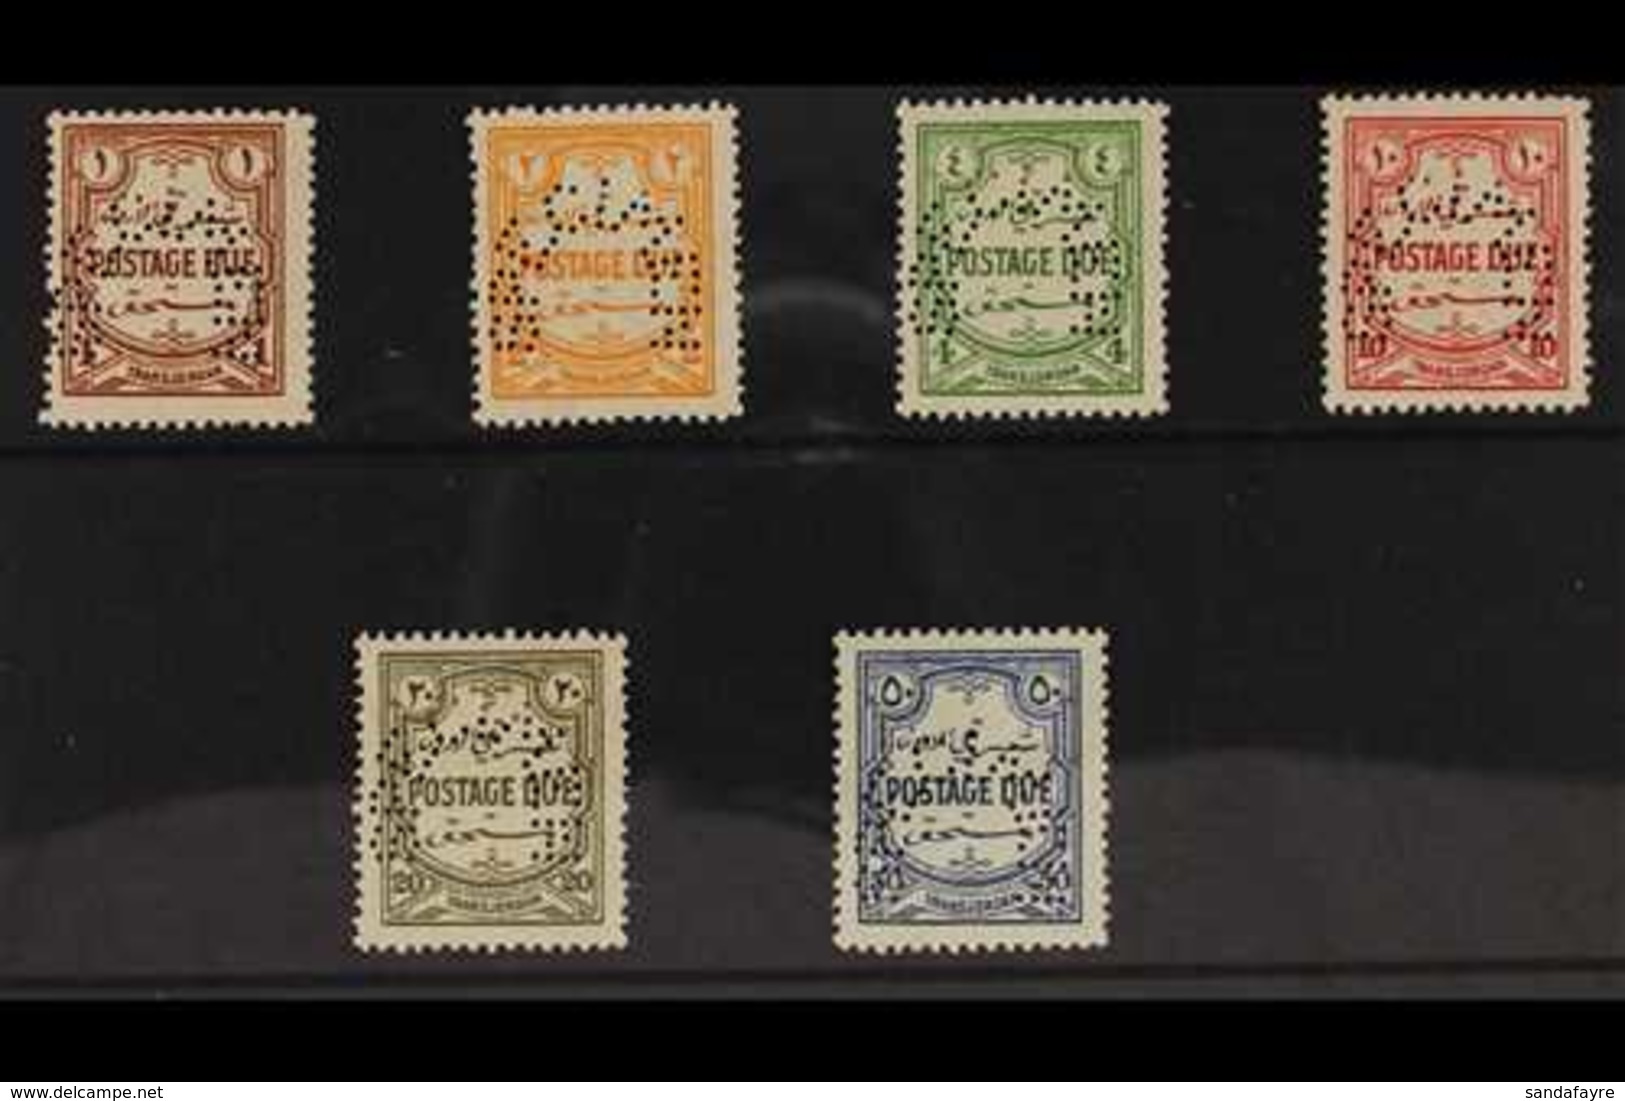 POSTAGE DUE 1929 Complete Set Perf "SPECIMEN", SG D189s/94s, Fine Mint. (6 Stamps) For More Images, Please Visit Http:// - Jordan